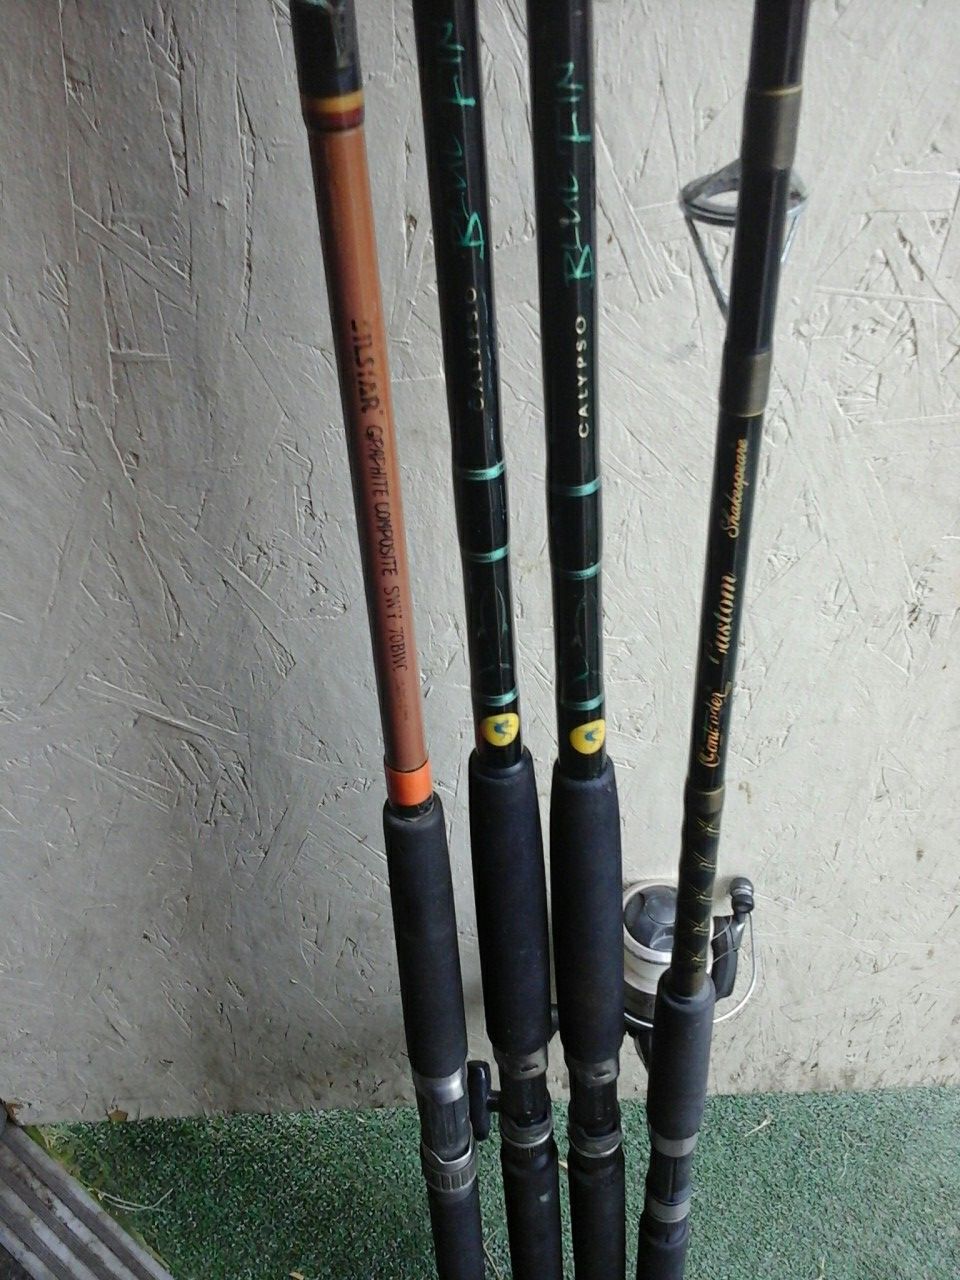 Fishing poles rods reels